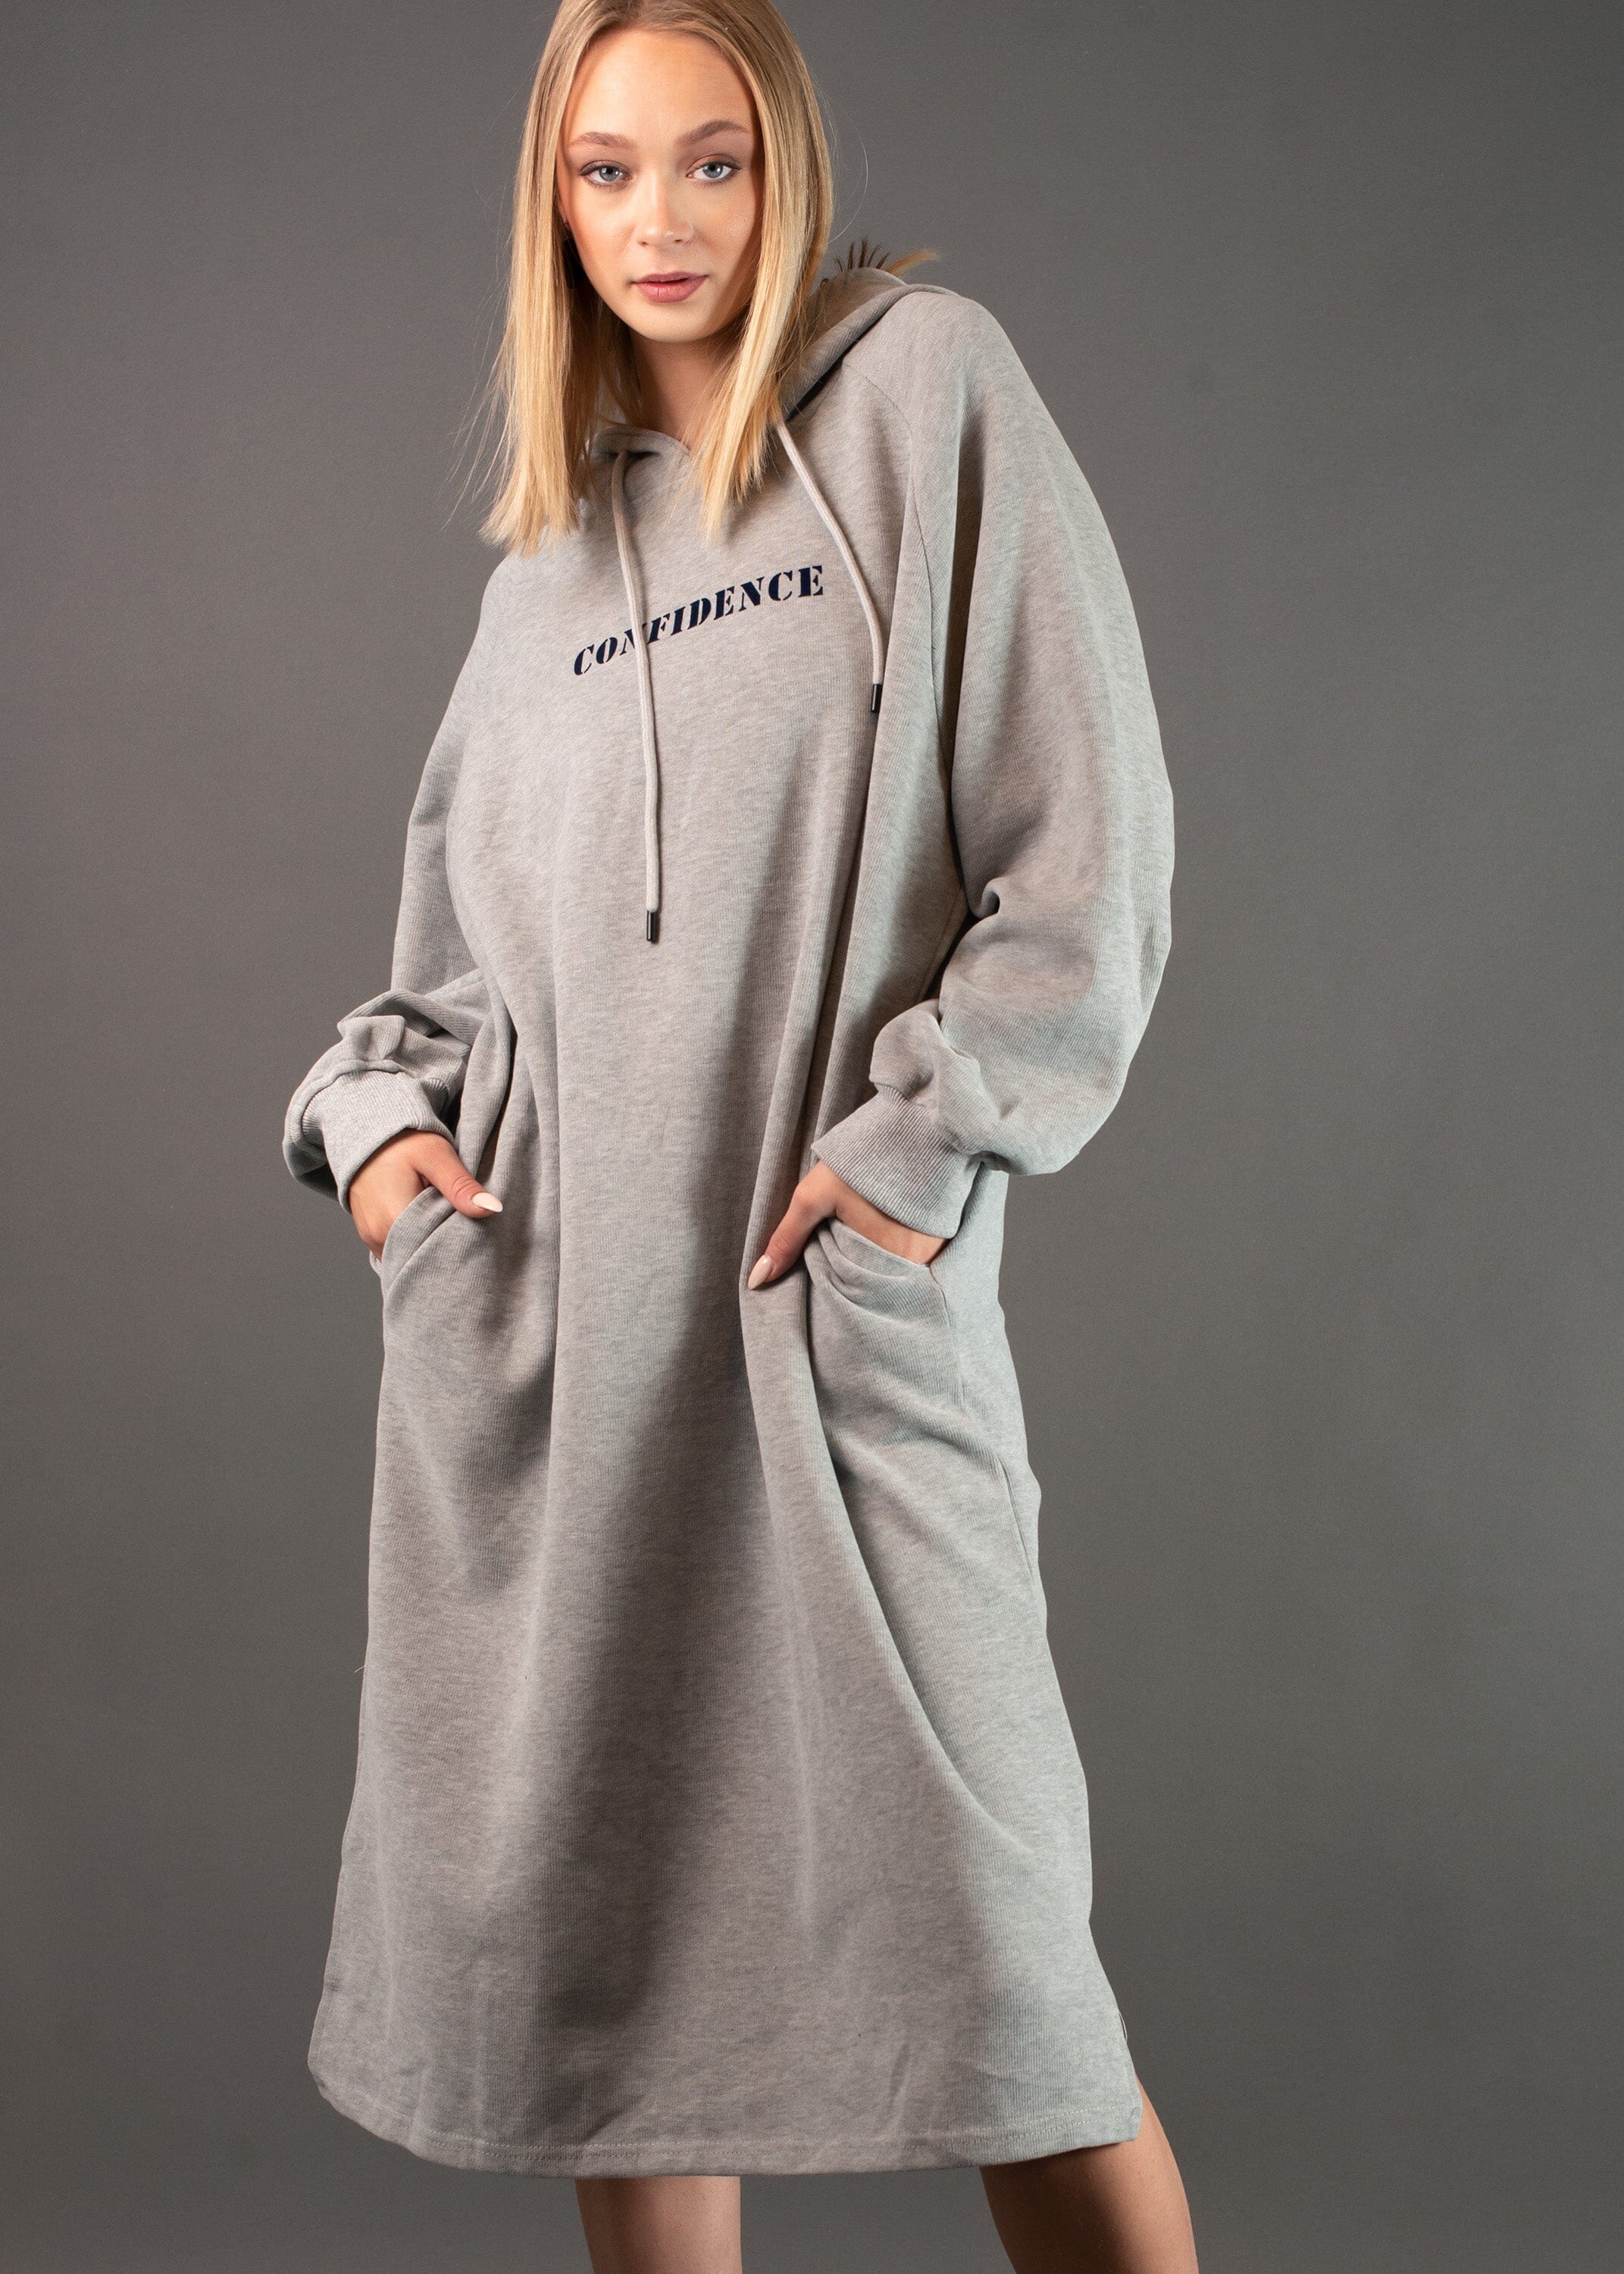 Confidence Sweatshirt Dress Dresses Kate Hewko One Size Grey 